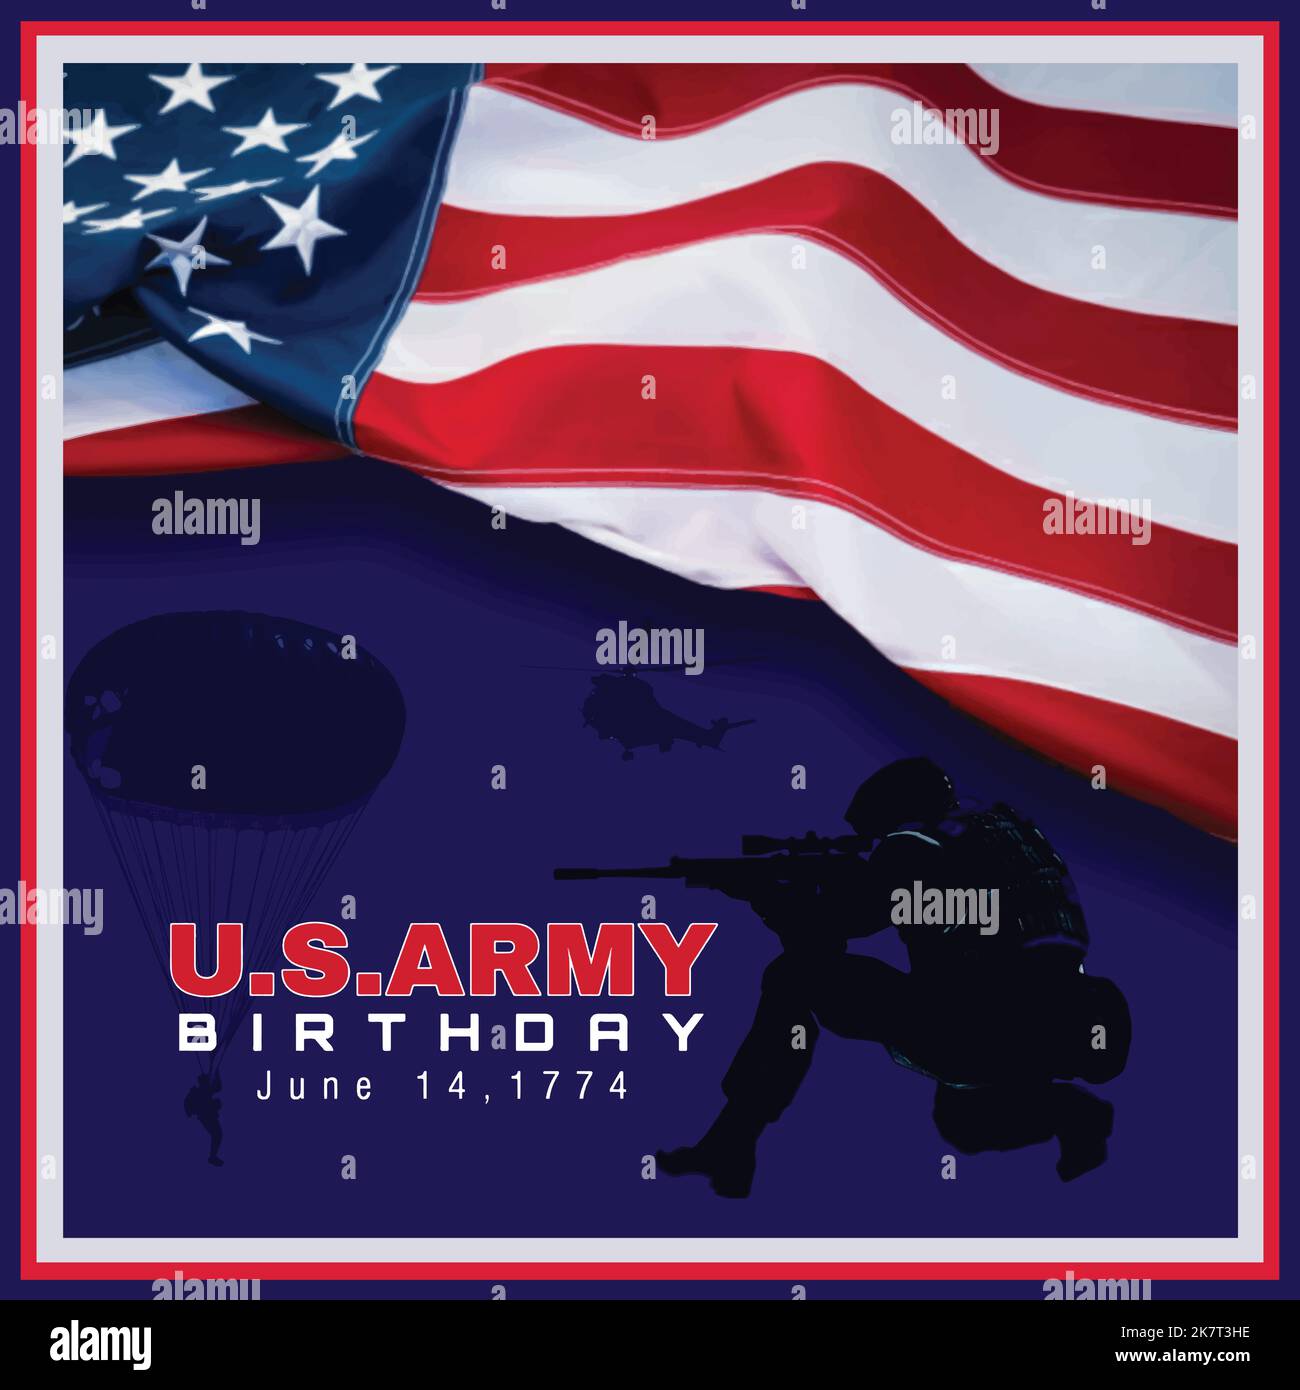 U.S.ARMY birthday June 14, 1774 vector illustration Stock Vector